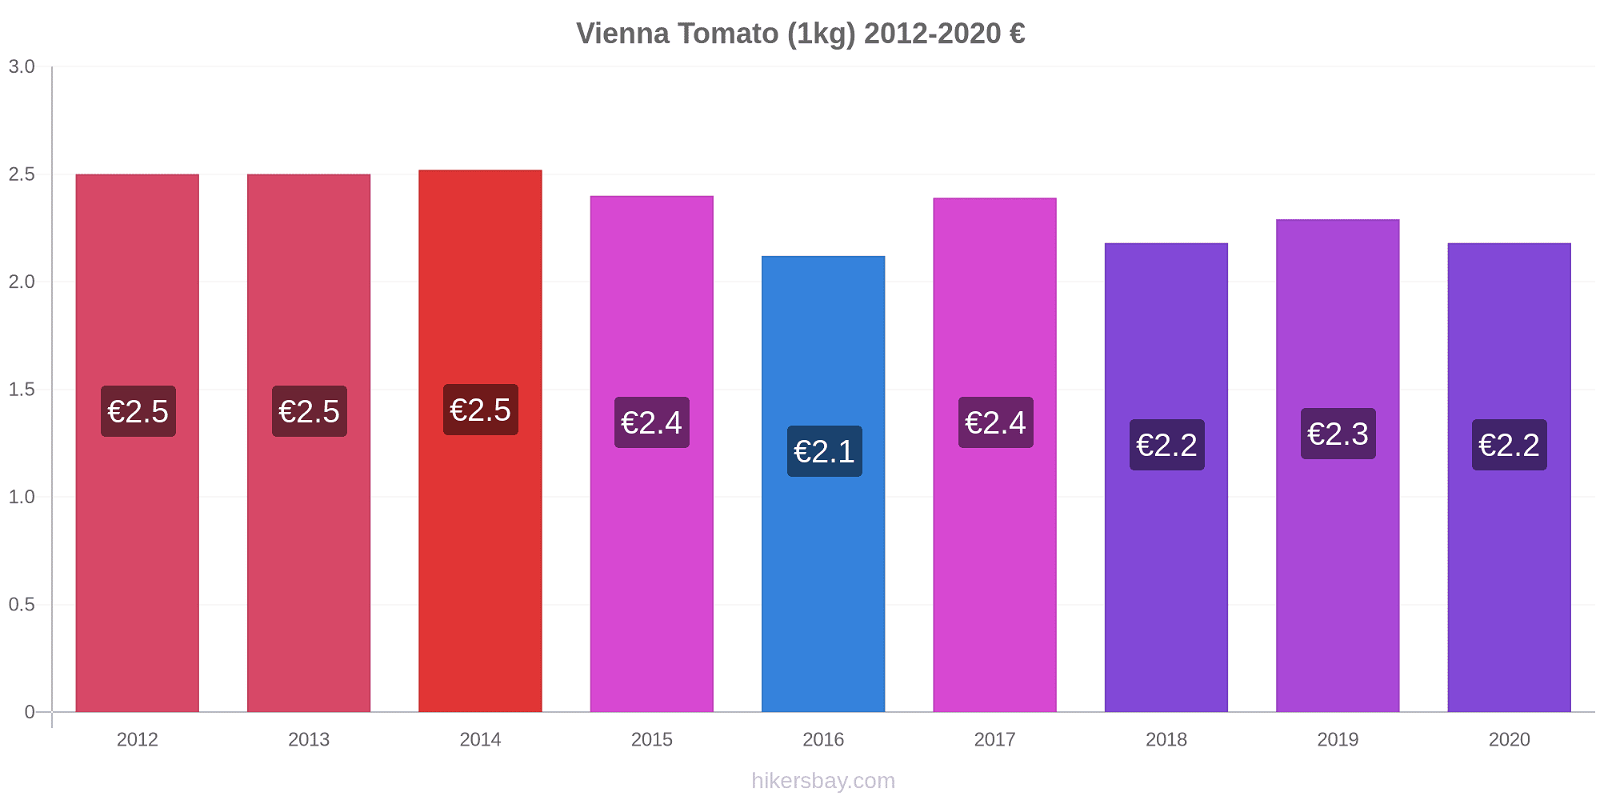 Vienna price changes Tomato (1kg) hikersbay.com